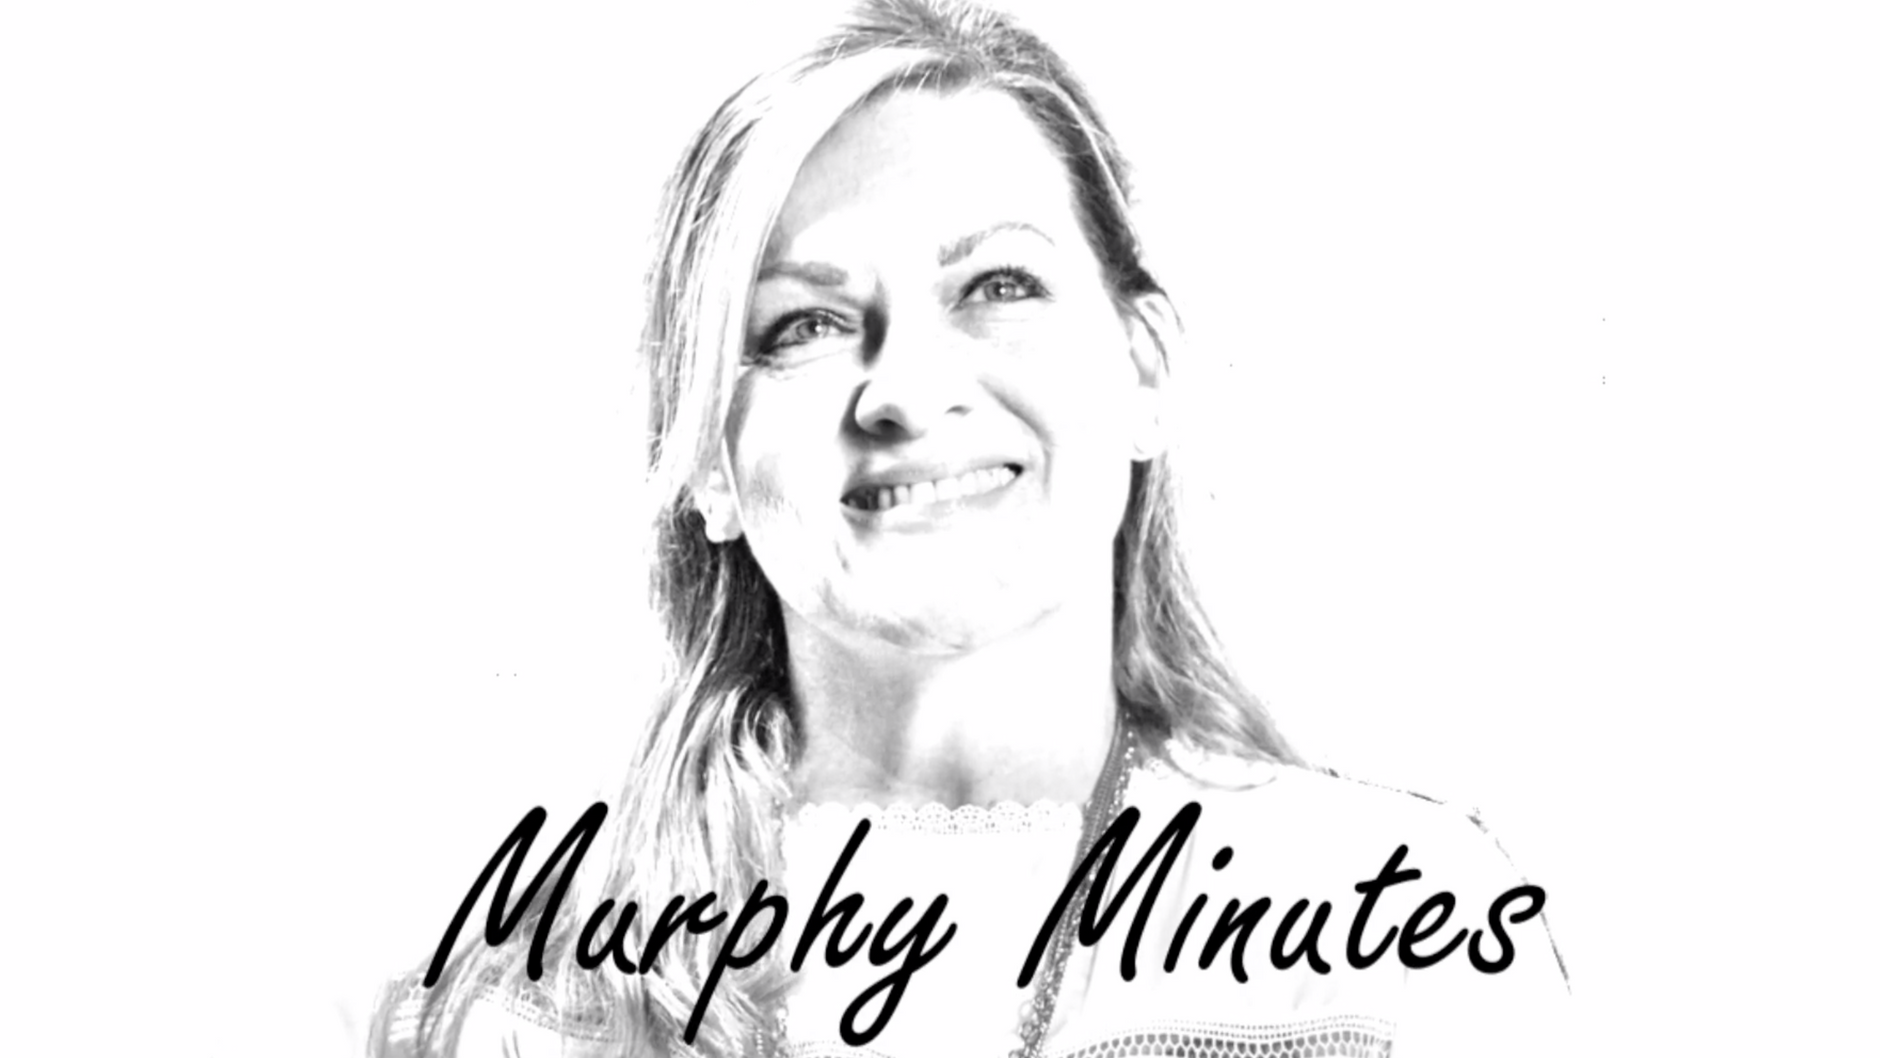 Murphy Minutes